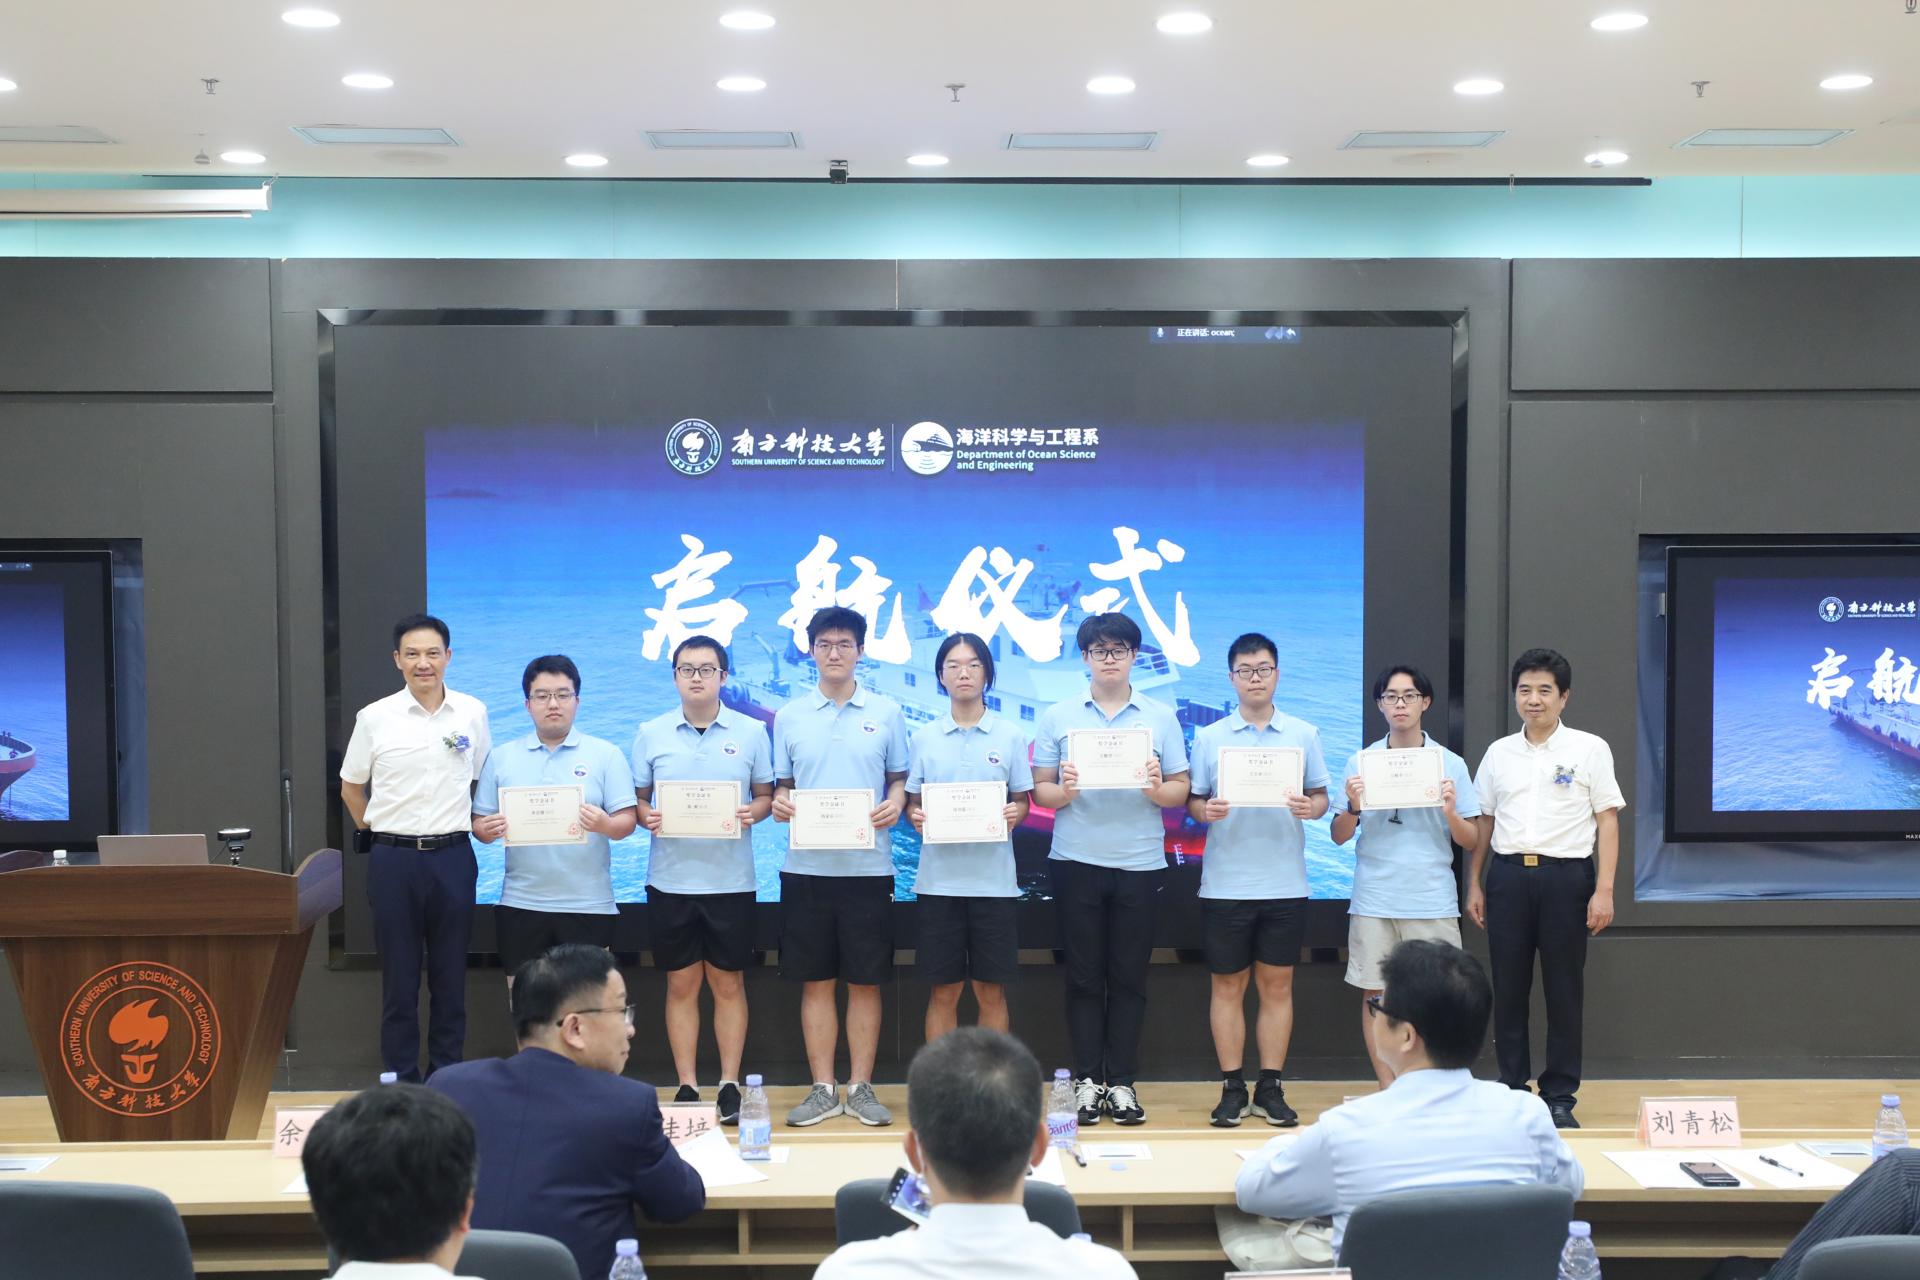 SUSTech’s first Ocean Elite Scholarship winners announced